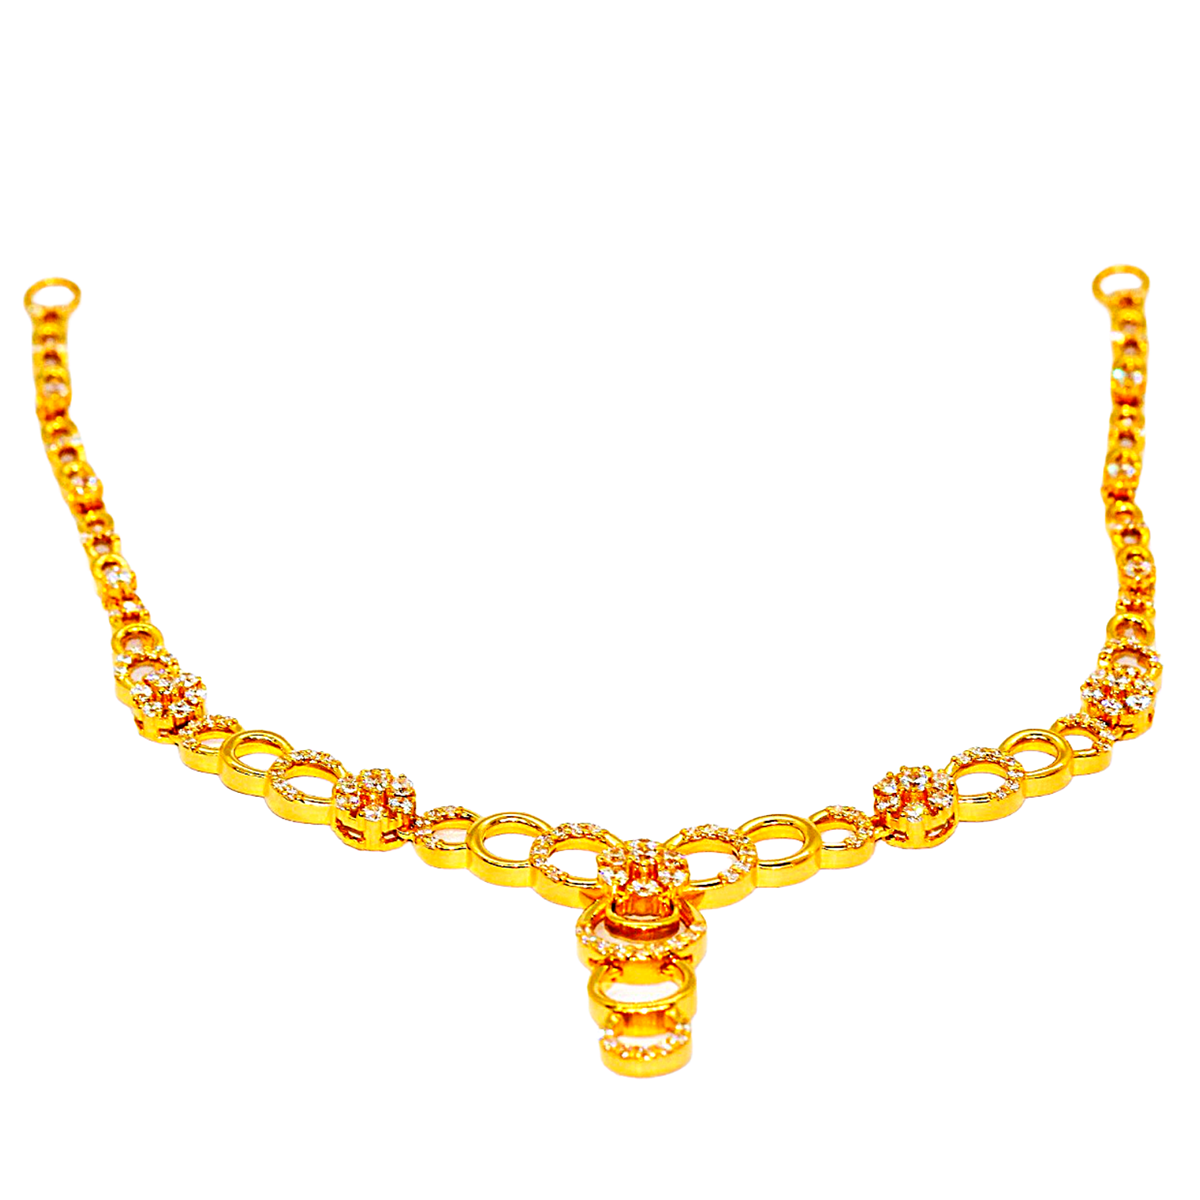 Arpita gold necklace